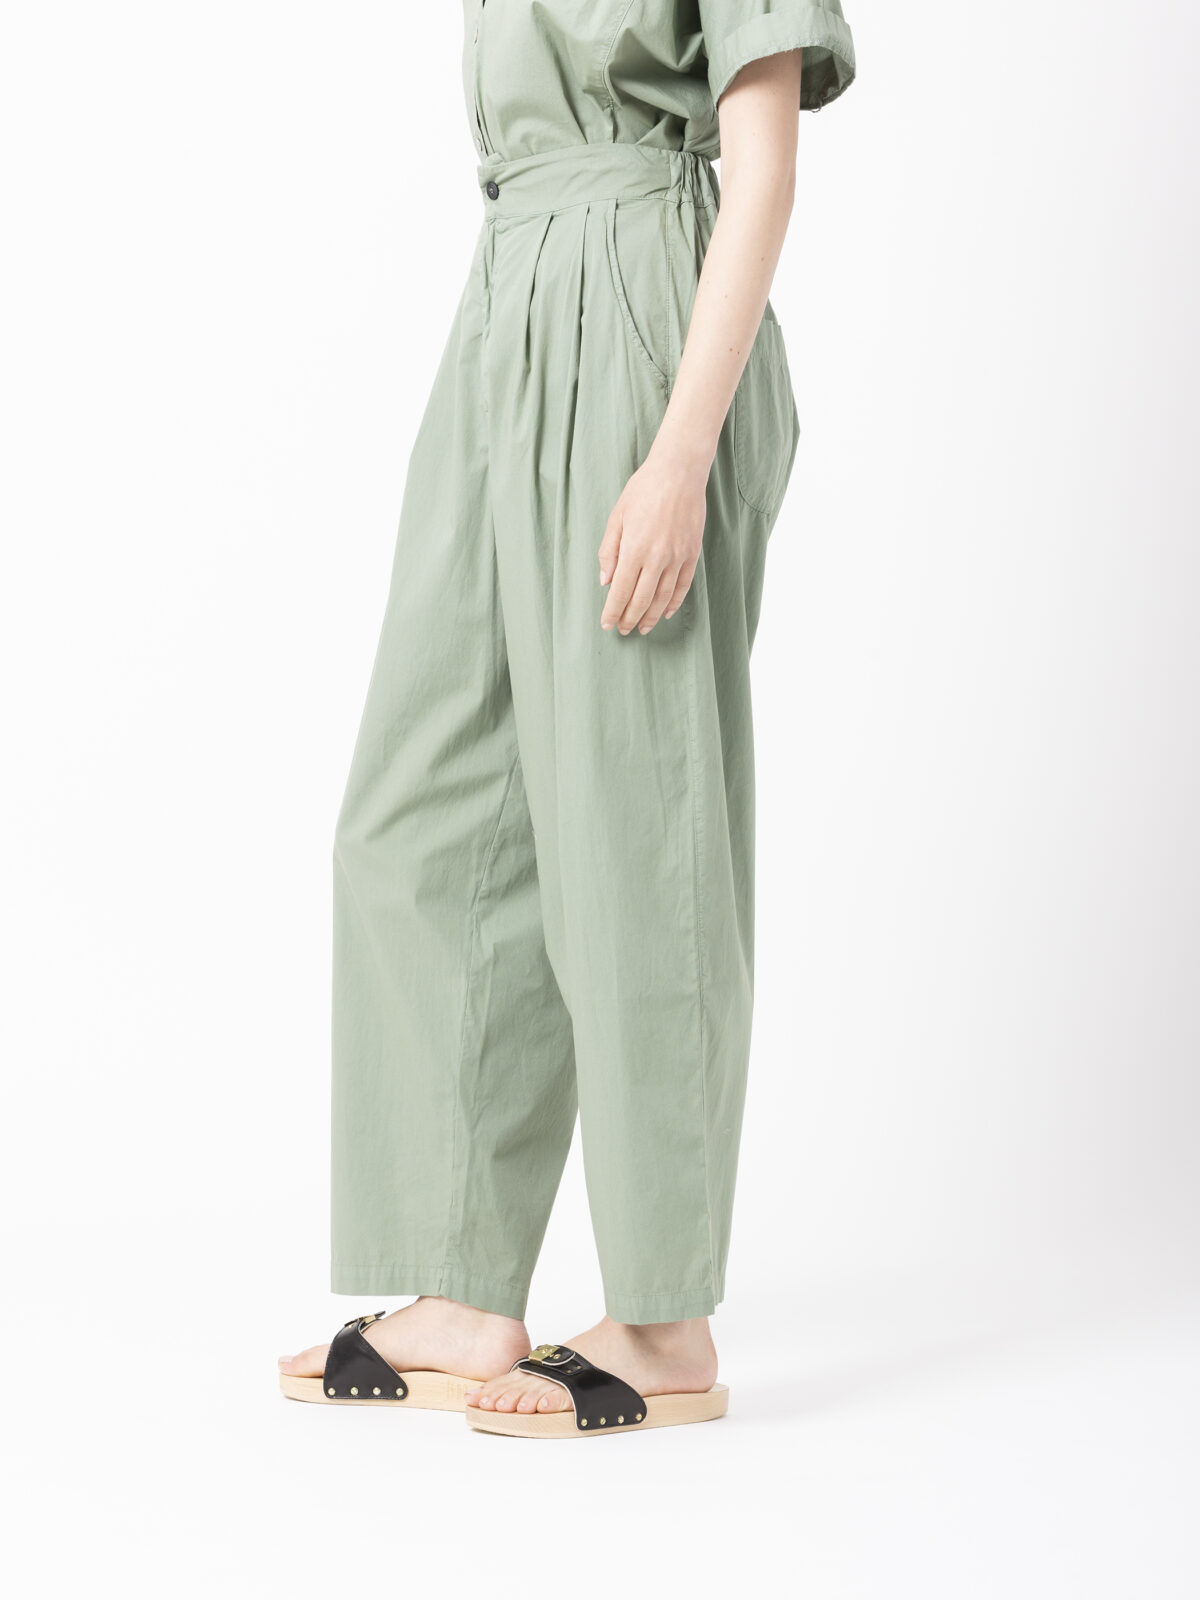 pambis-green-slouchy-pants-cotton-poplin-high-waisted-loose-pleats-crossley-matchboxathens